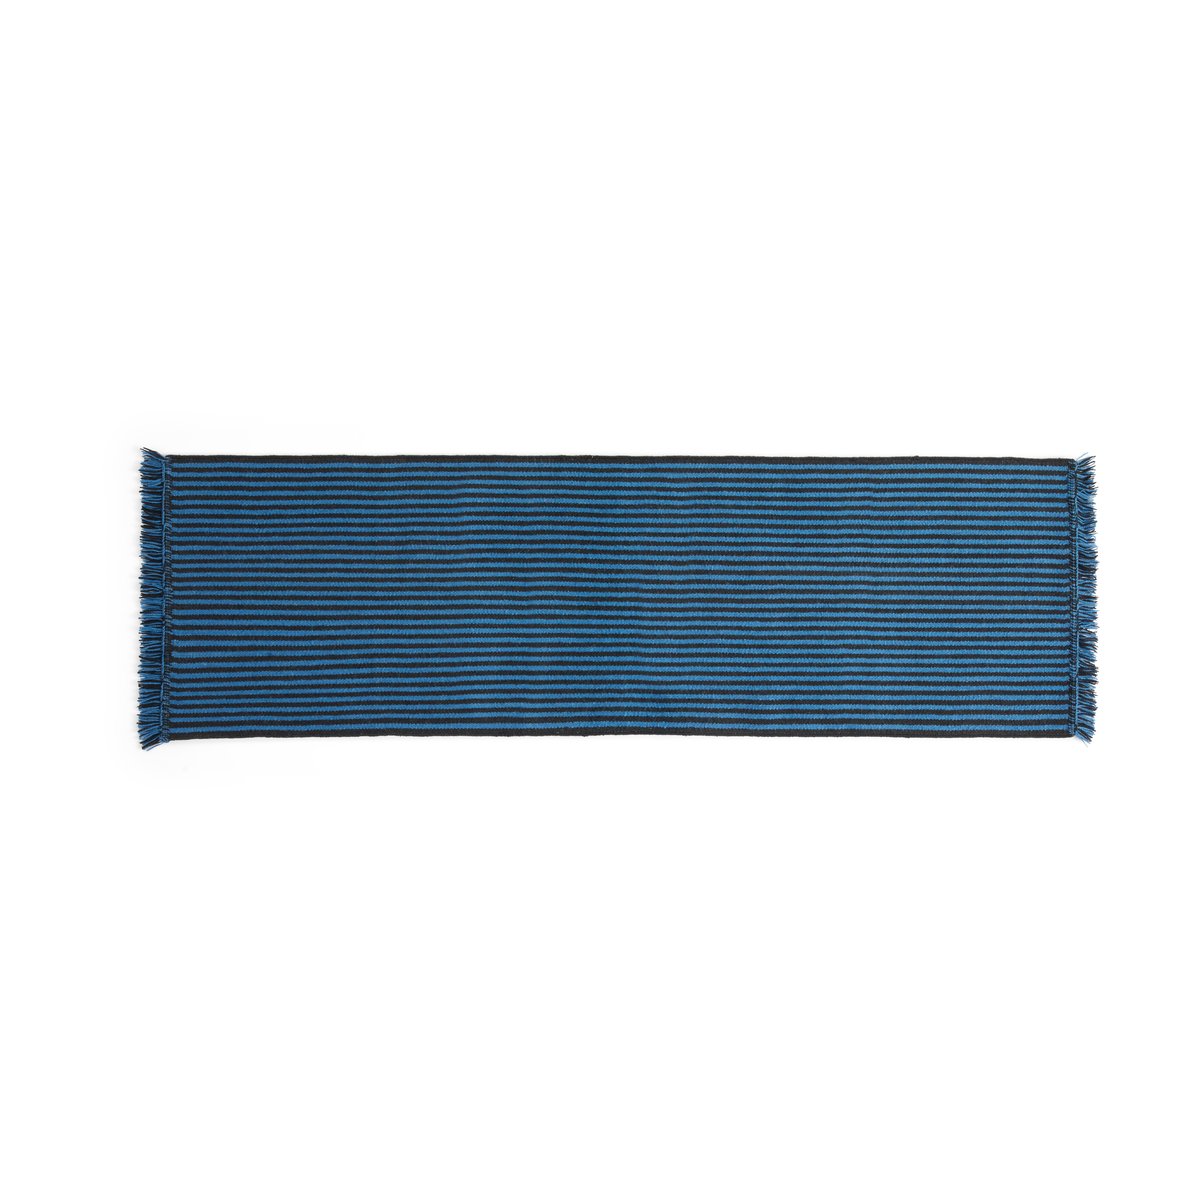 HAY Stripes and Stripes vloerkleed 60x200 cm Blue